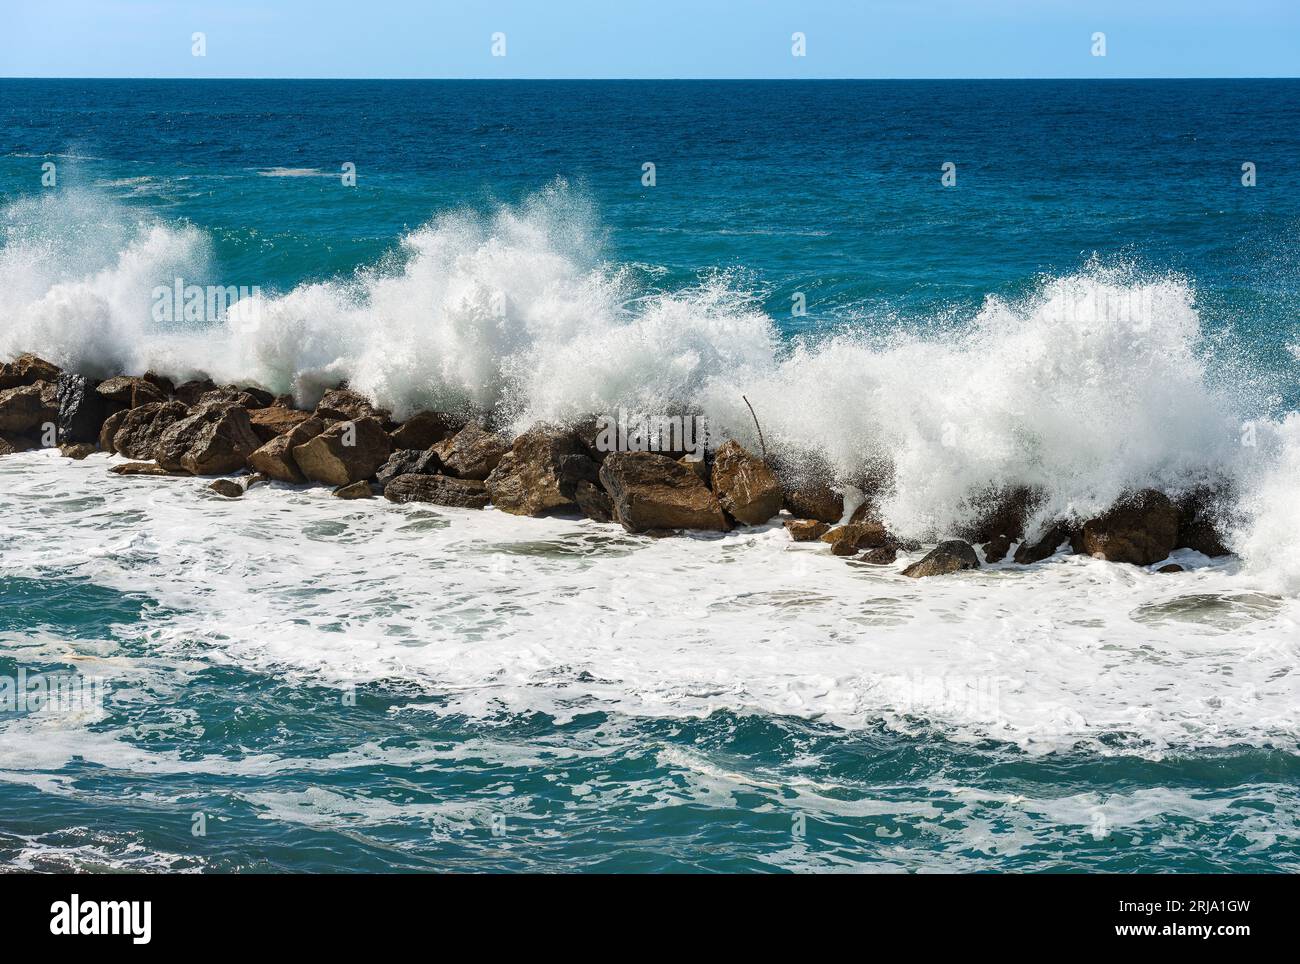 Large white waves of the sea break on the rocks. Breakwater near the small Village of Framura. La Spezia, Liguria, Italy, Europe. Mediterranean Sea. Stock Photo